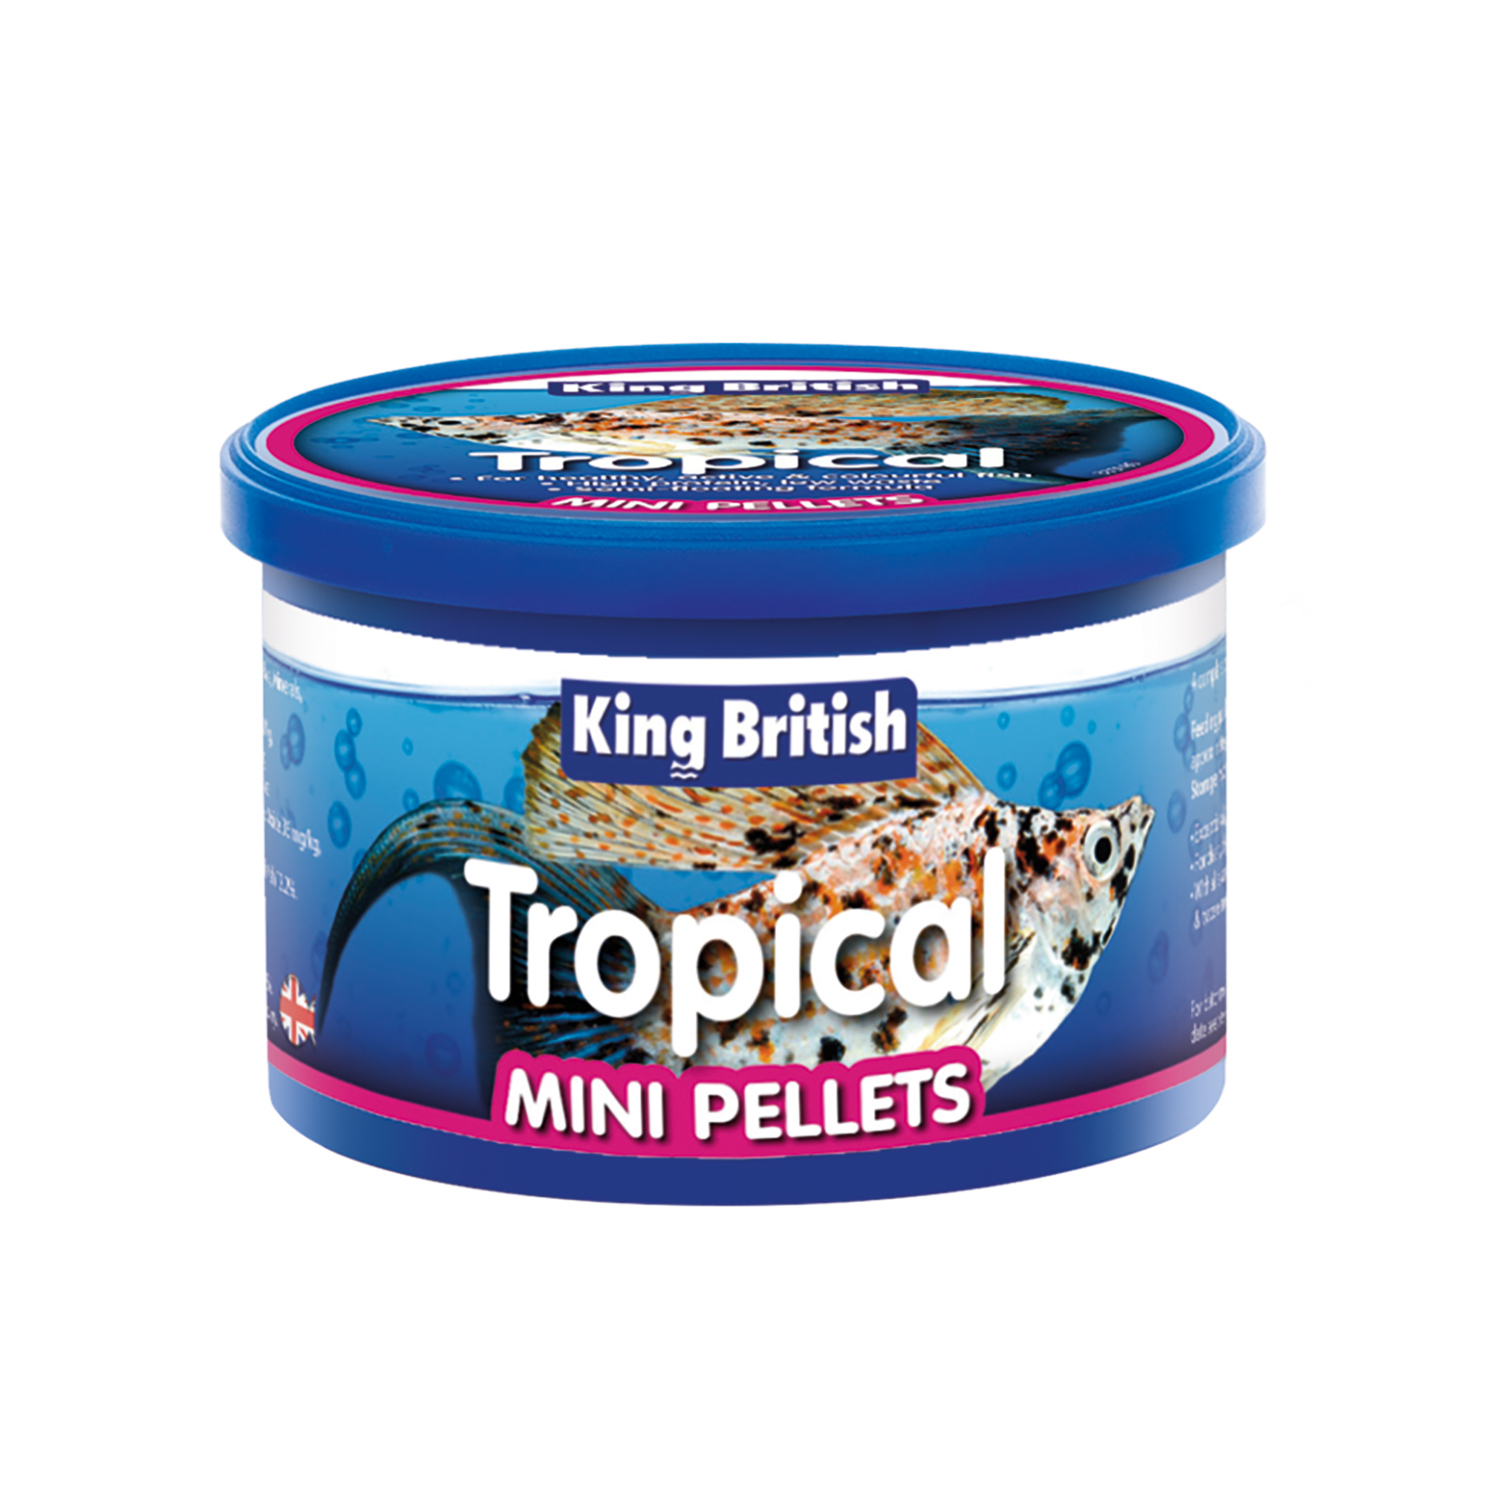 King British Tropical Fish Mini Pellets Image